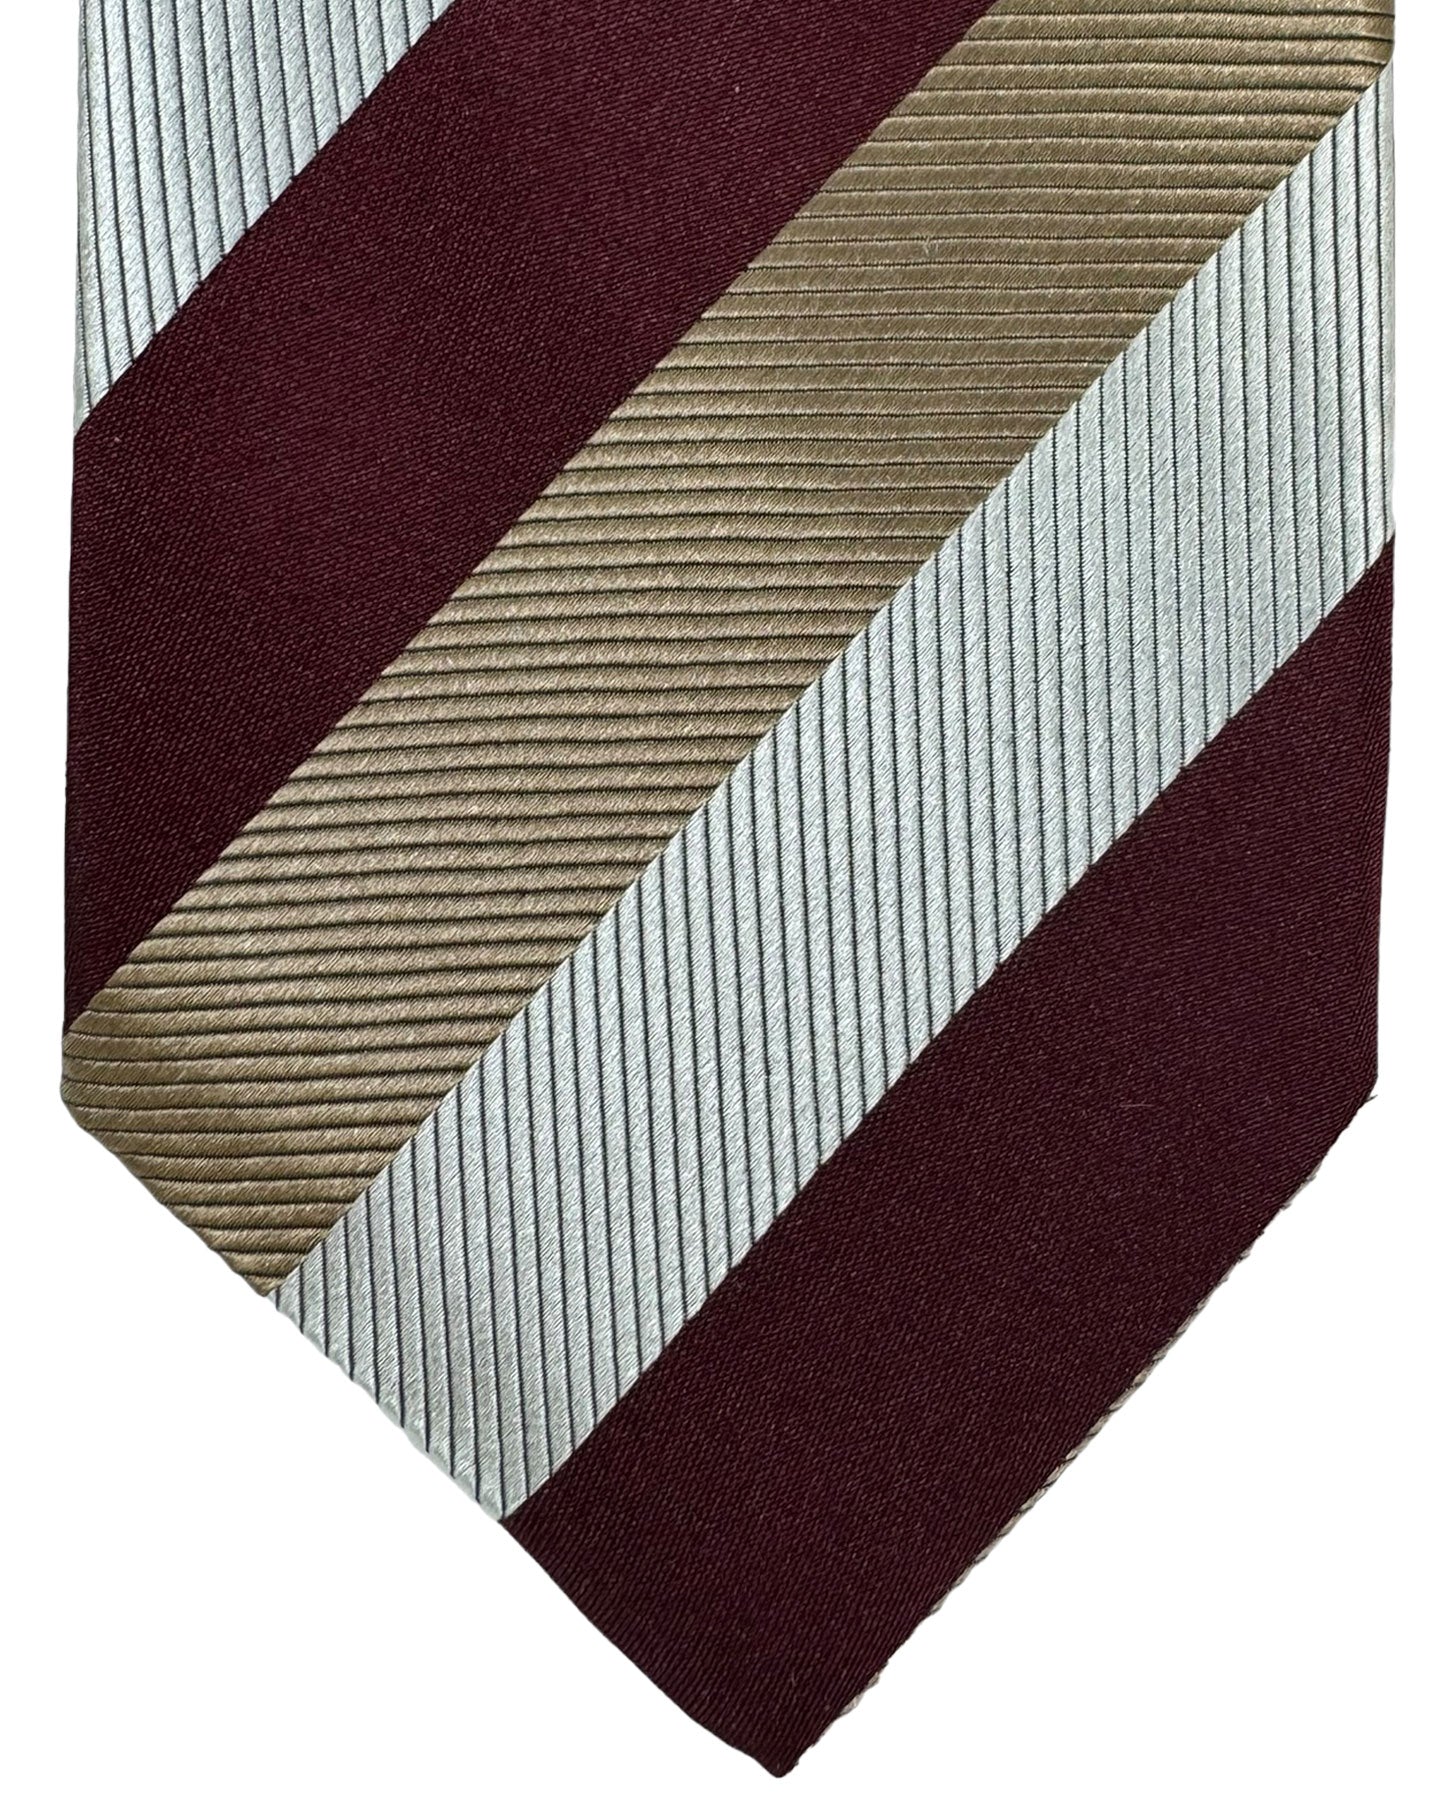 Isaia Tie Taupe Maroon Stripes Design - Sartorial Sevenfold Tie